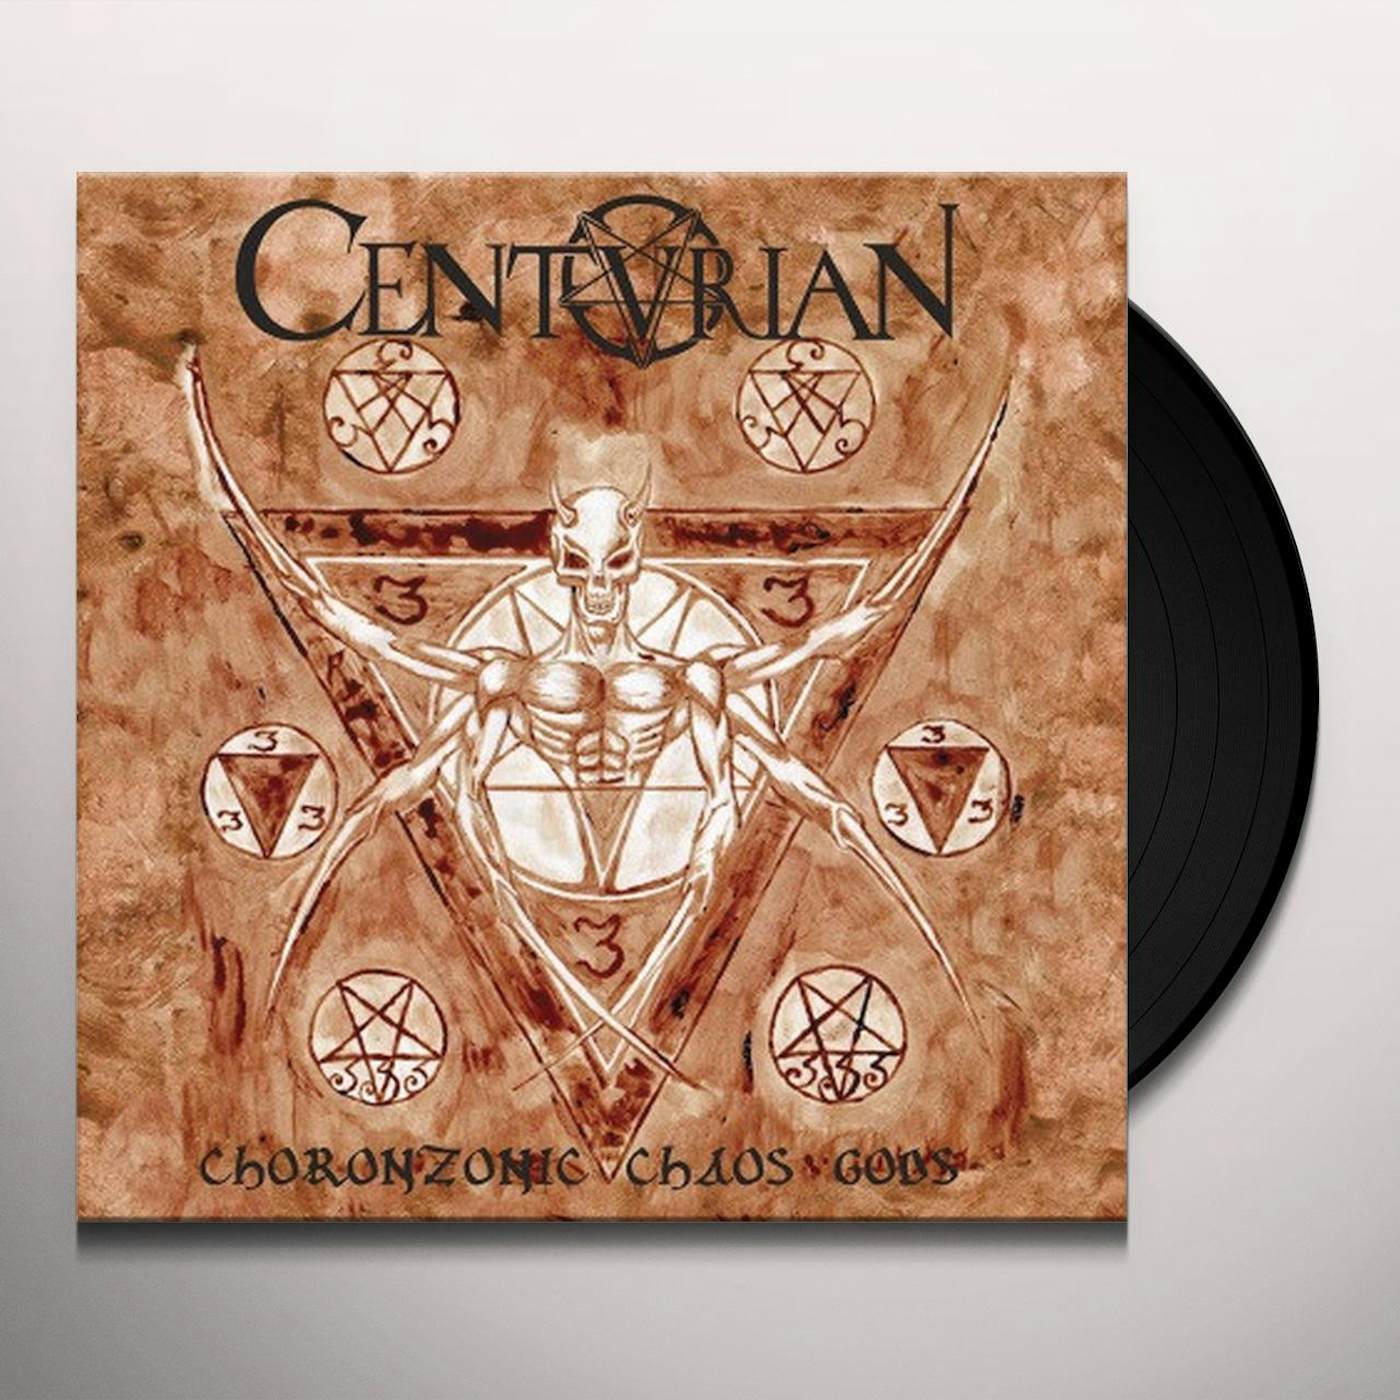 Centurian Choronzonic Chaos Gods Vinyl Record